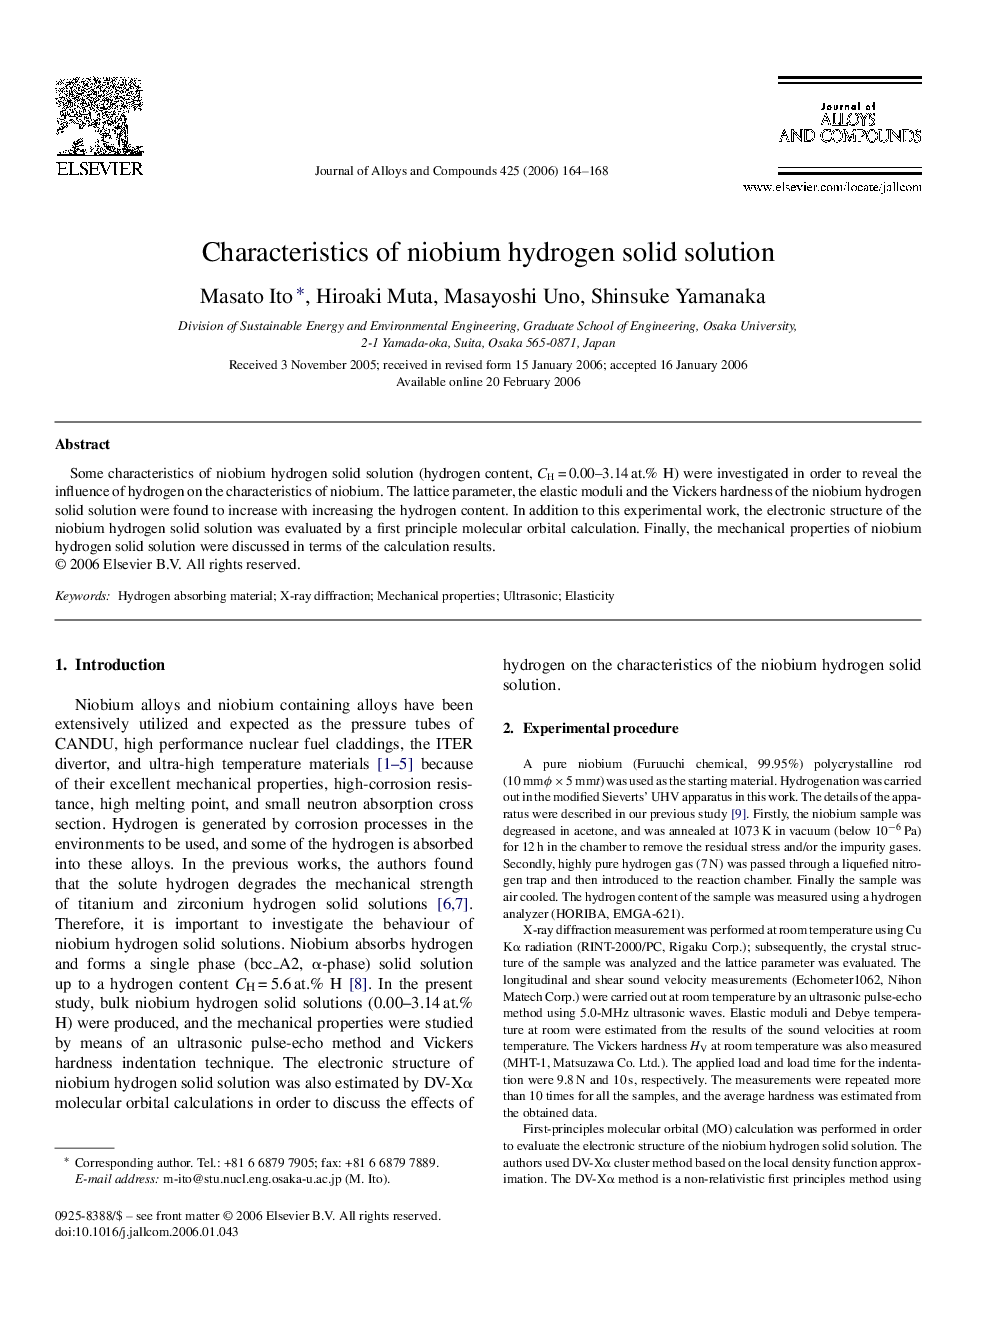 Characteristics of niobium hydrogen solid solution